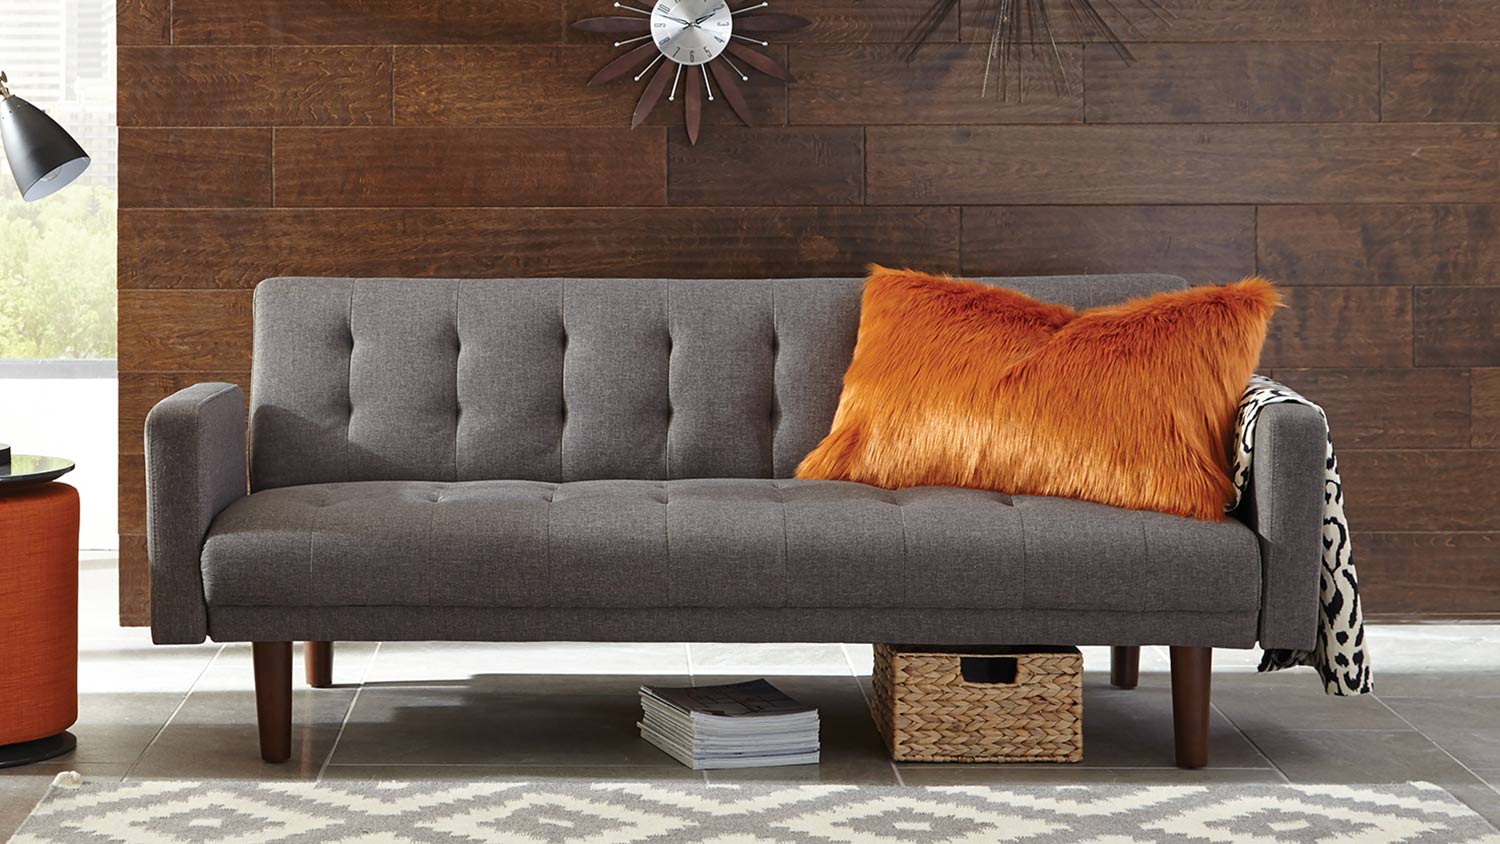 skyler designs sofa bed